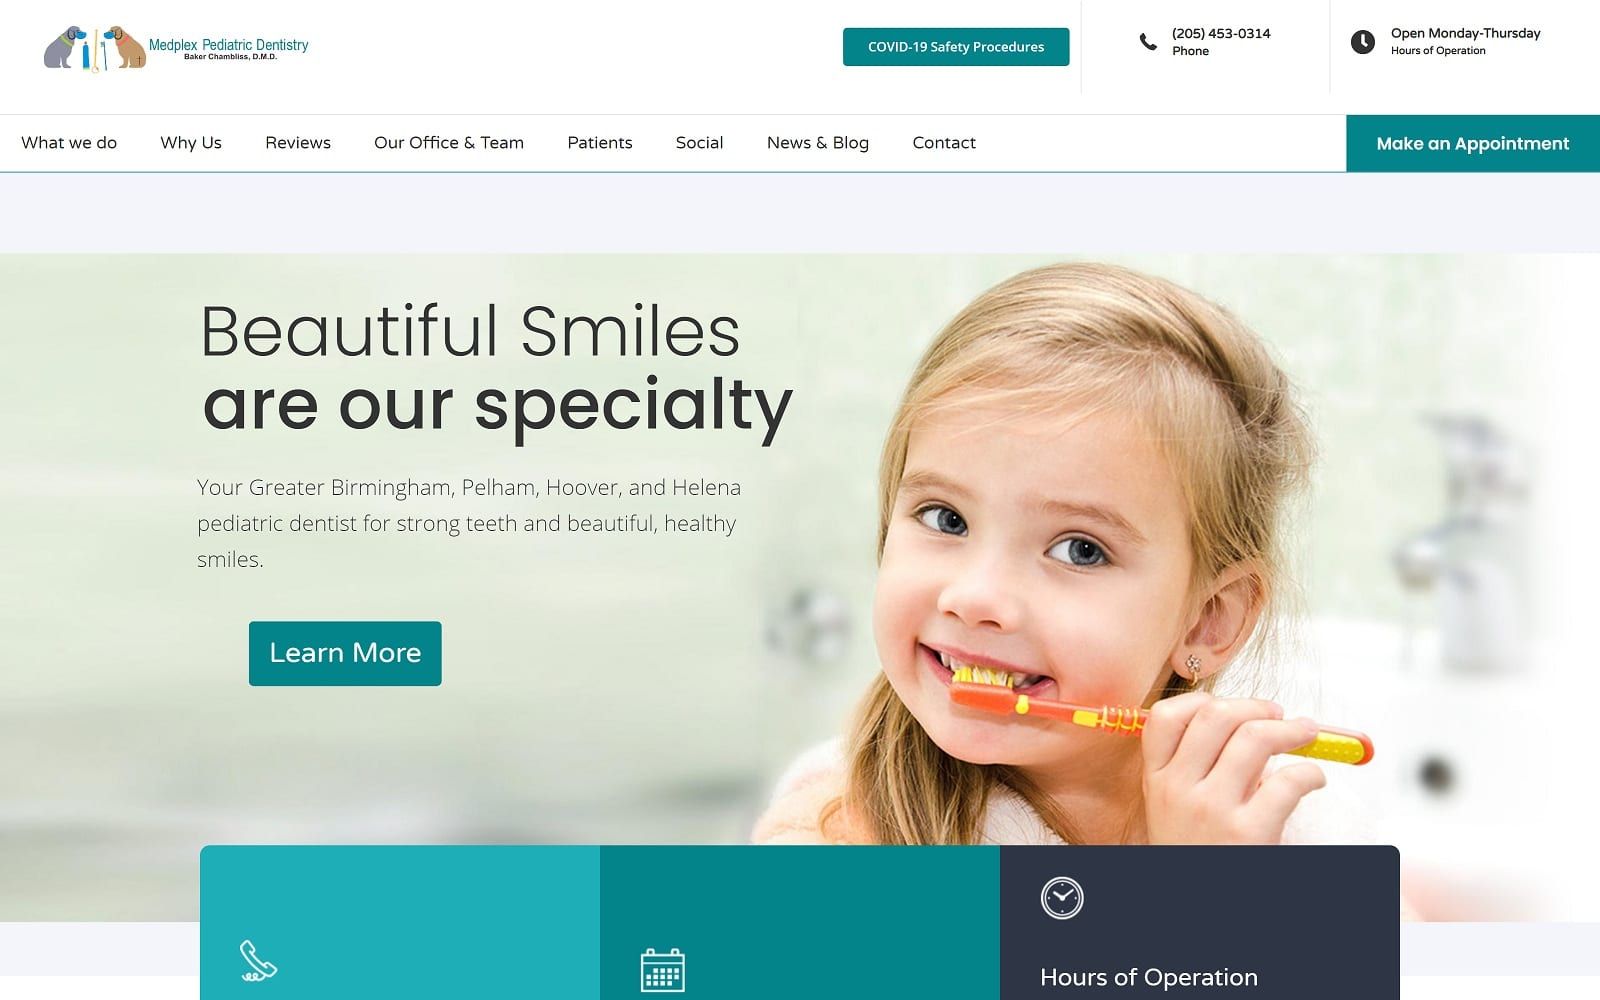 The screenshot of medplex pediatric dentistry drbakerchambliss. Com website